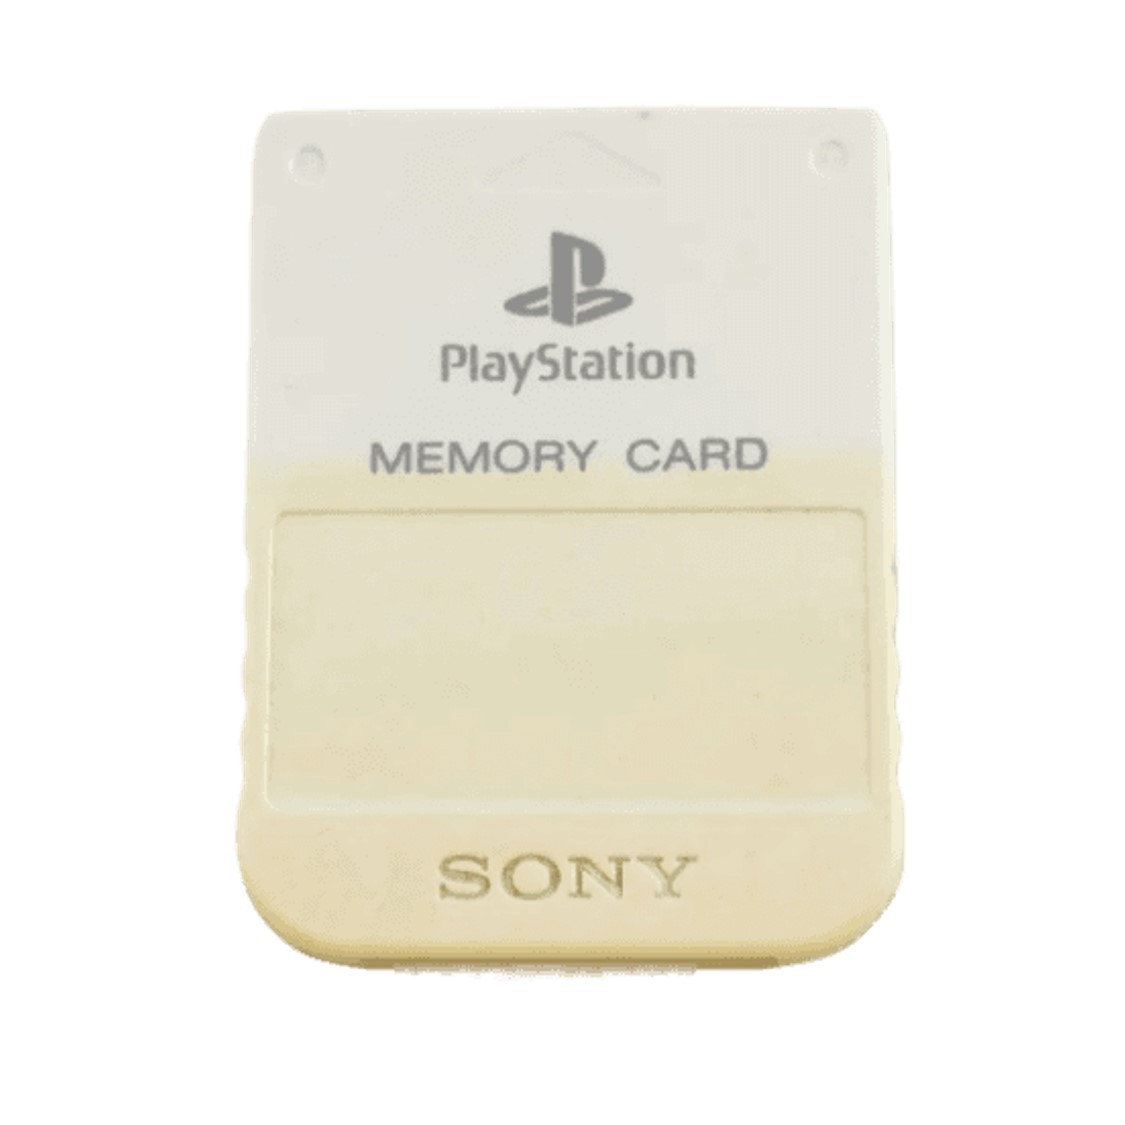 Originele Sony PlayStation 1 Memory Card - White - Playstation 1 Hardware